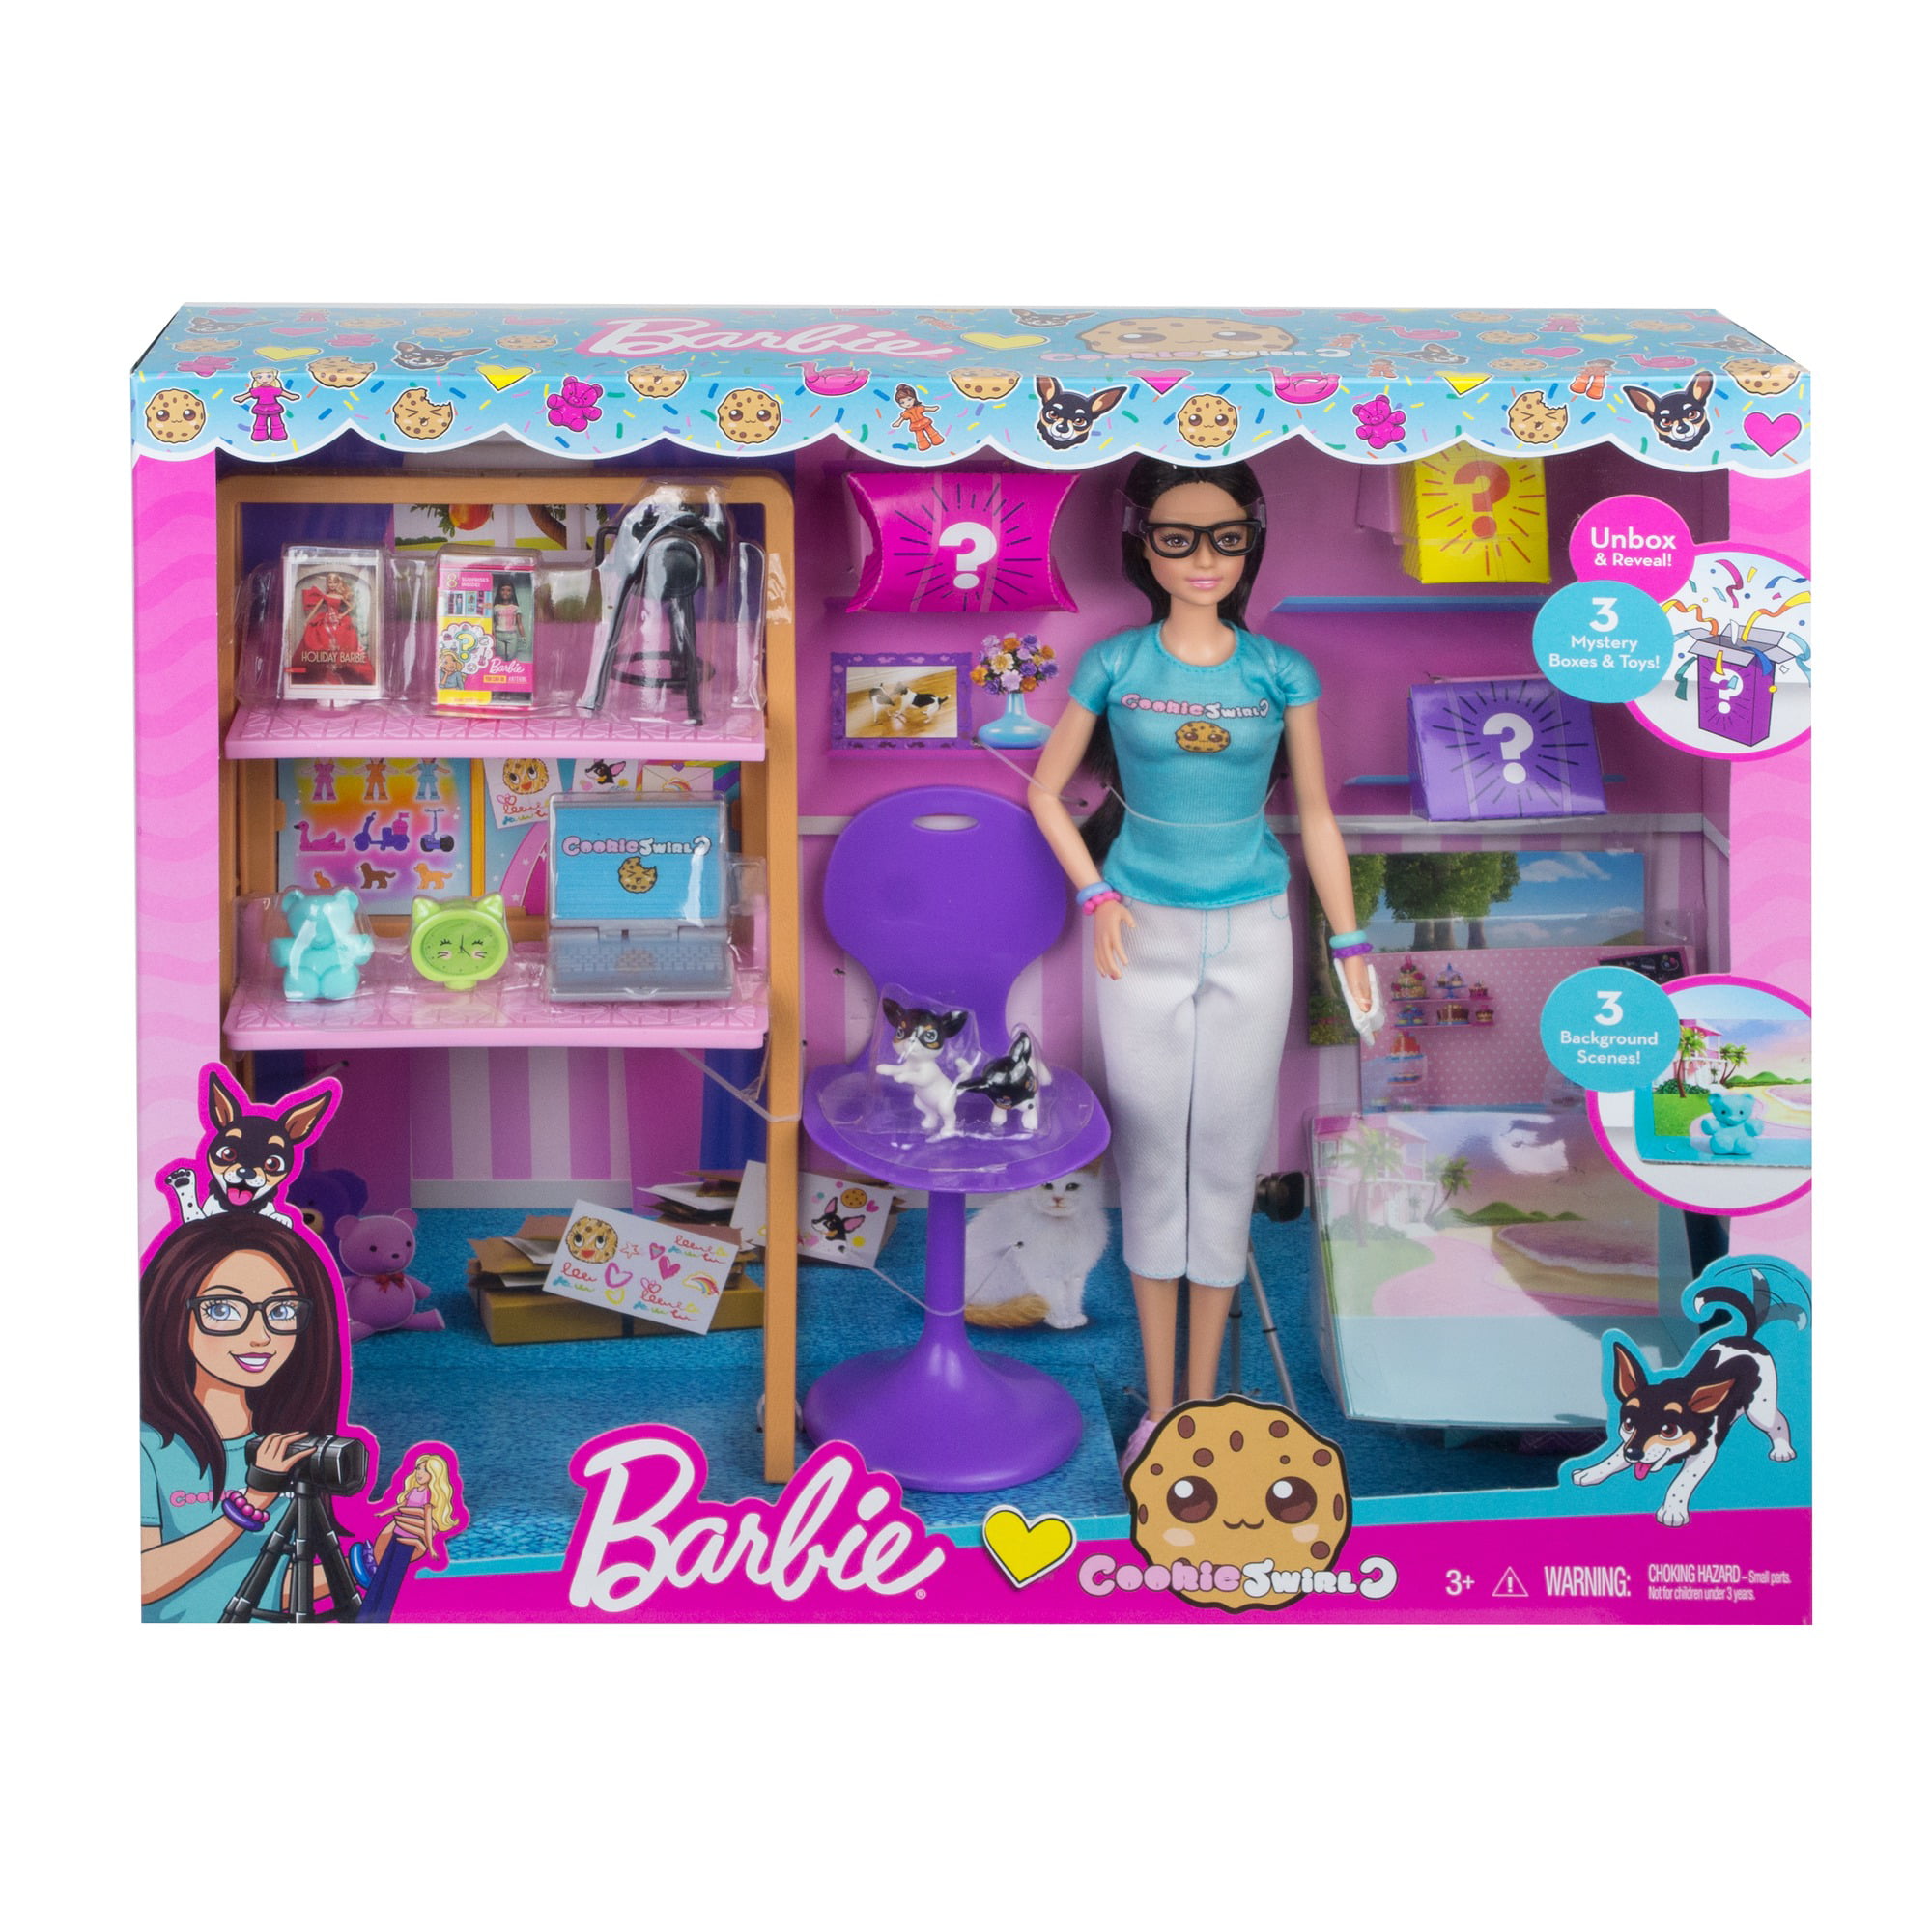 Barbie CookieSwirlC Doll and 